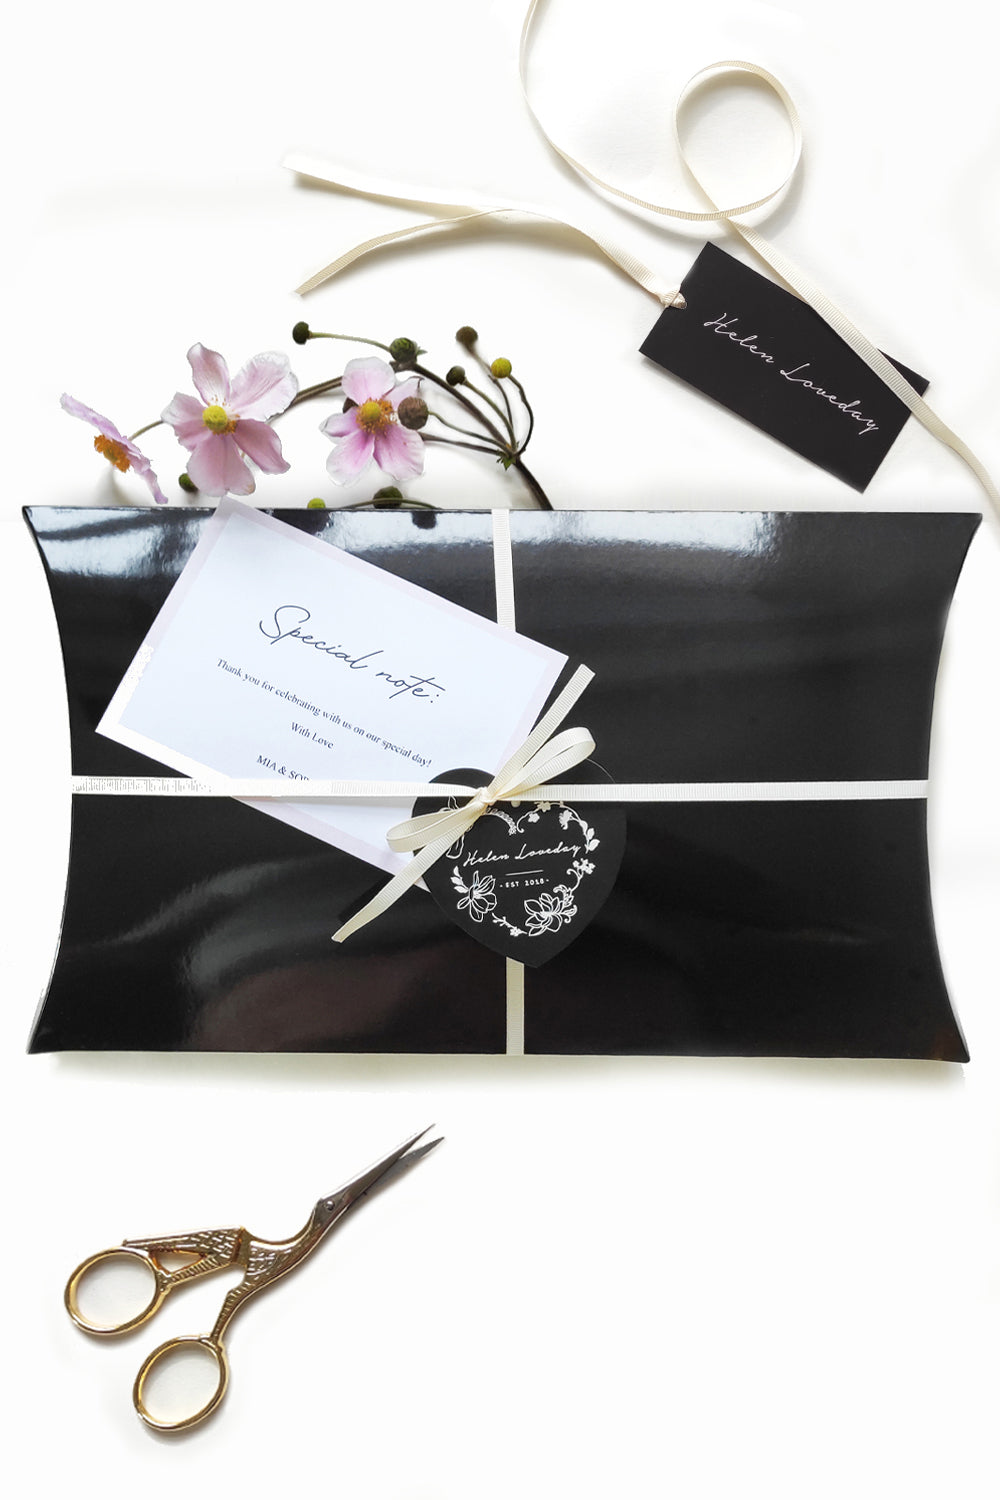 Pure Silk Kimono | Black | Luxury Dressing Gown | Helen Loveday | Garden of Dreams kimono from Helen Loveday for 255